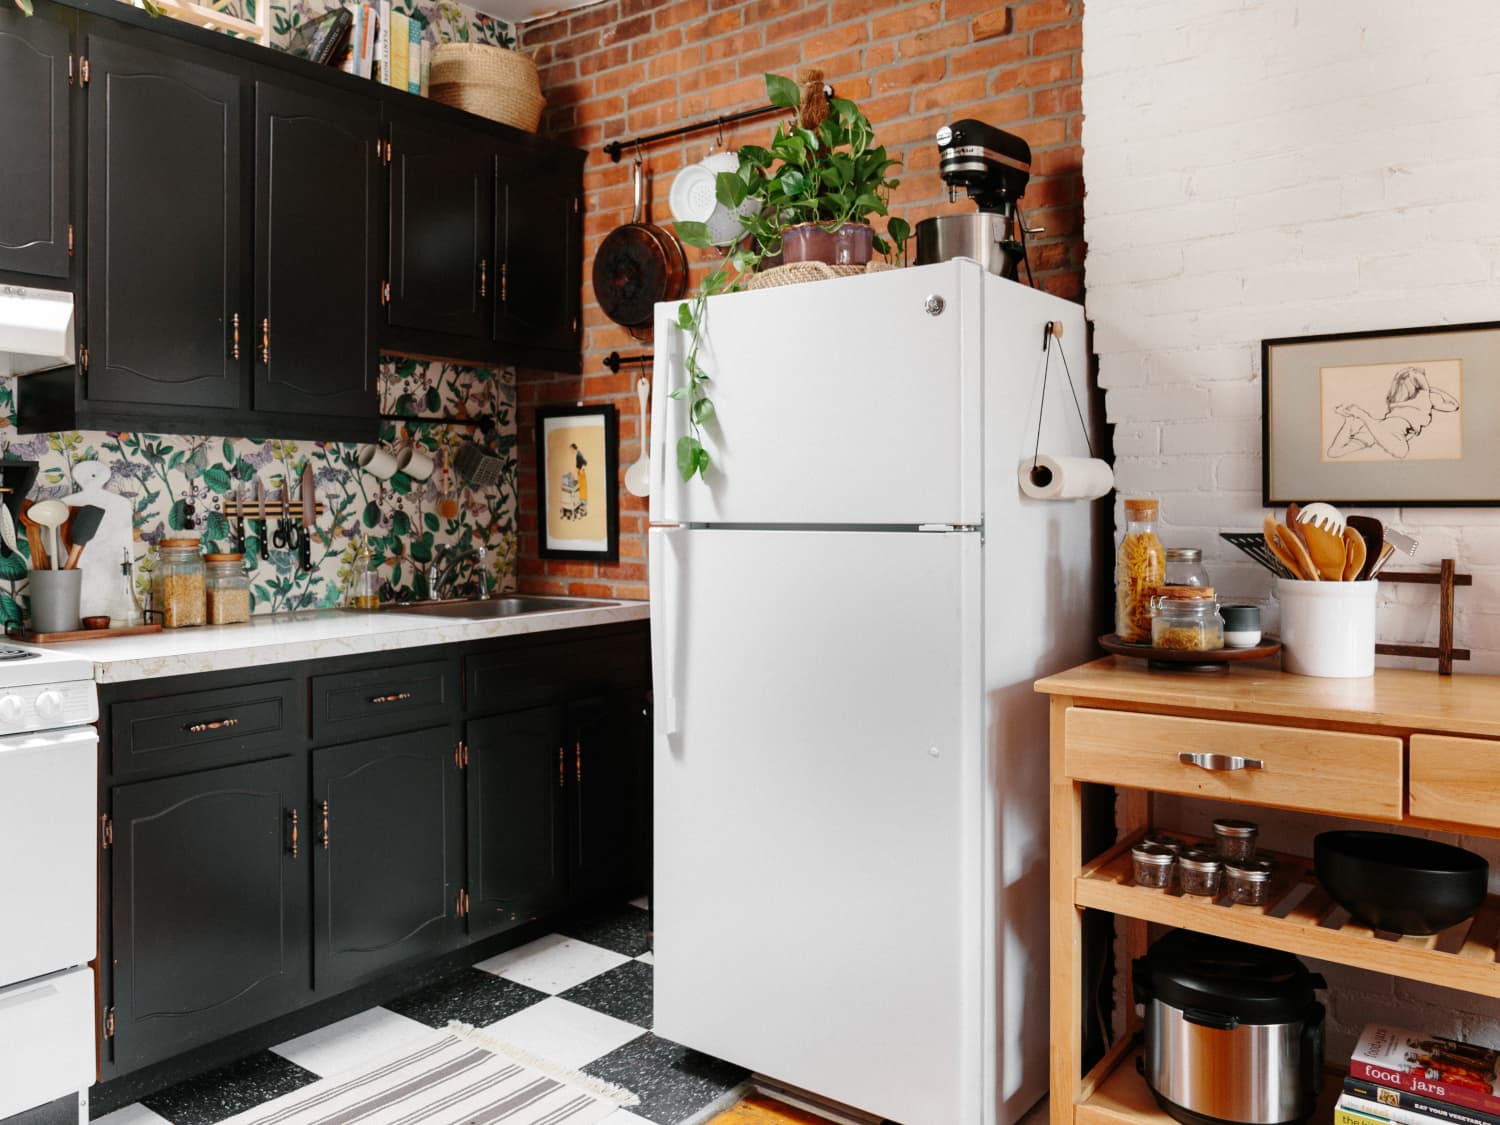 refrigerators under 500 - Best Buy